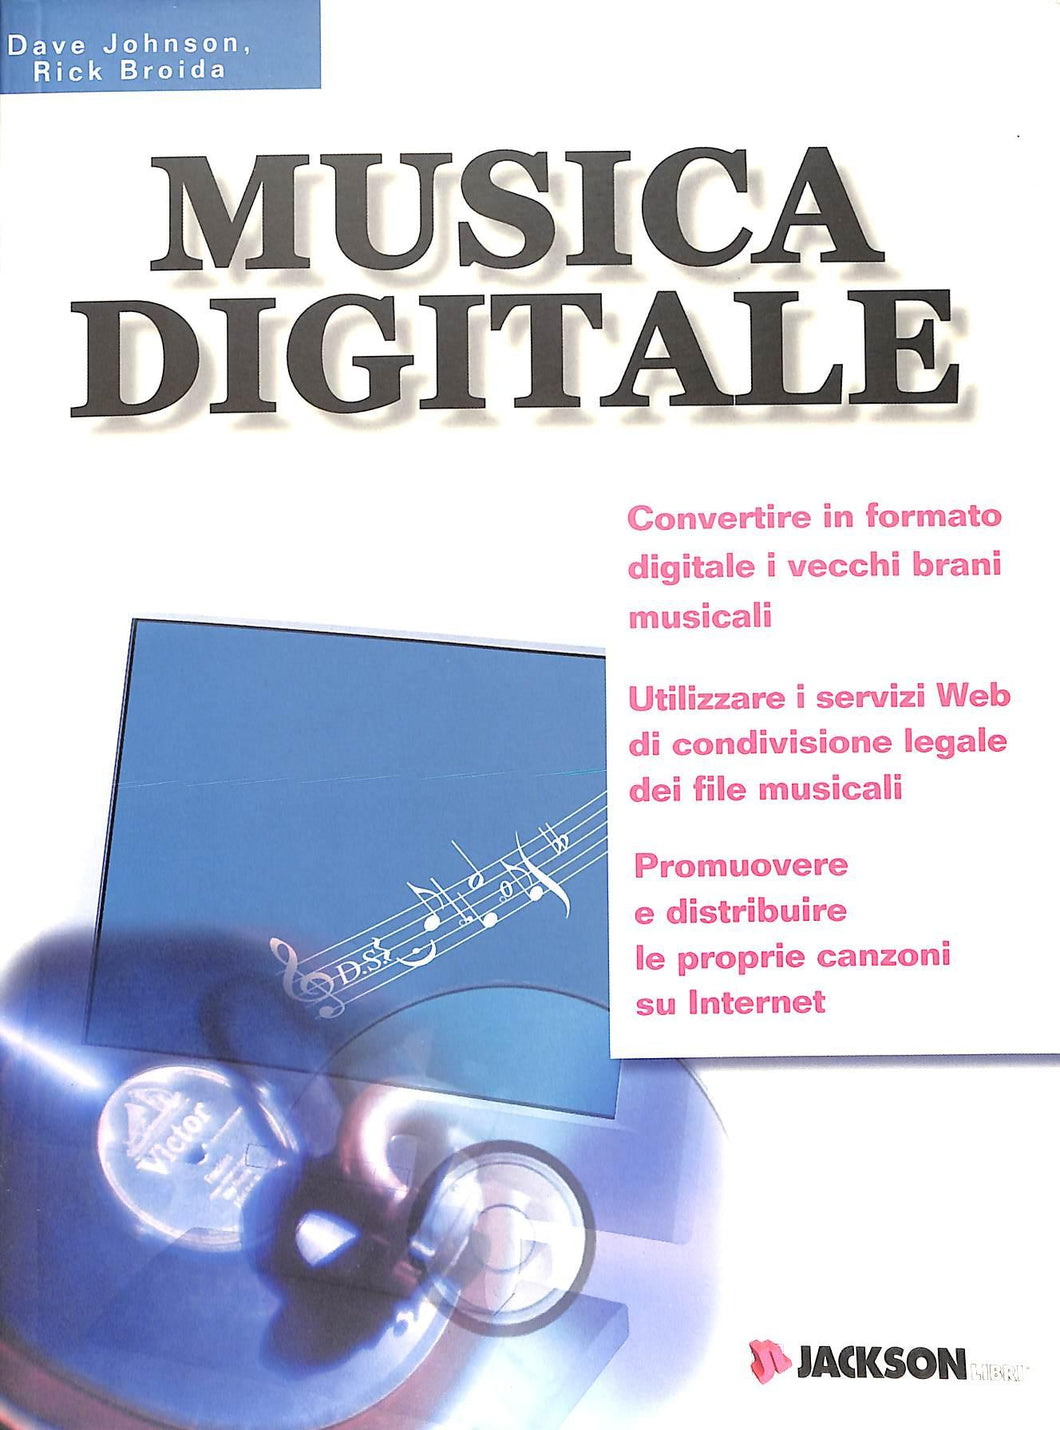 Musica digitale
/ Dave Johnson, Rick Broida